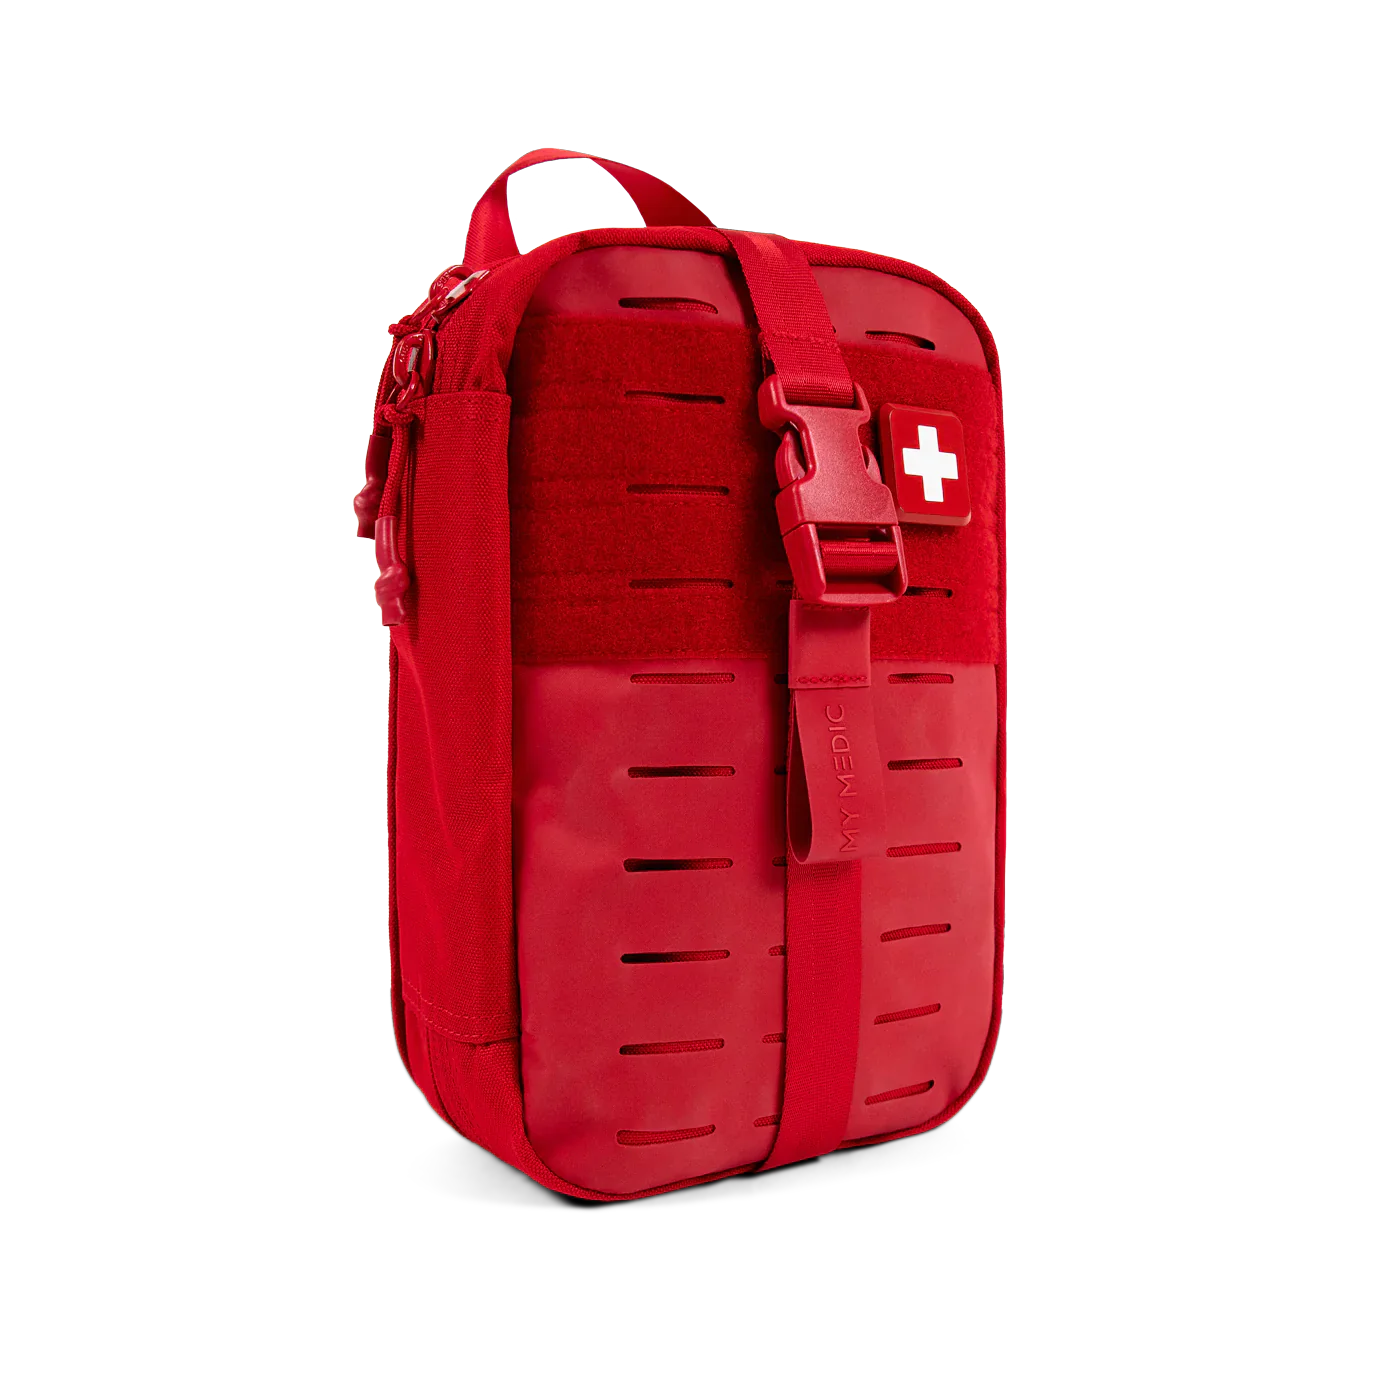 Myfak First Aid Kits Pro